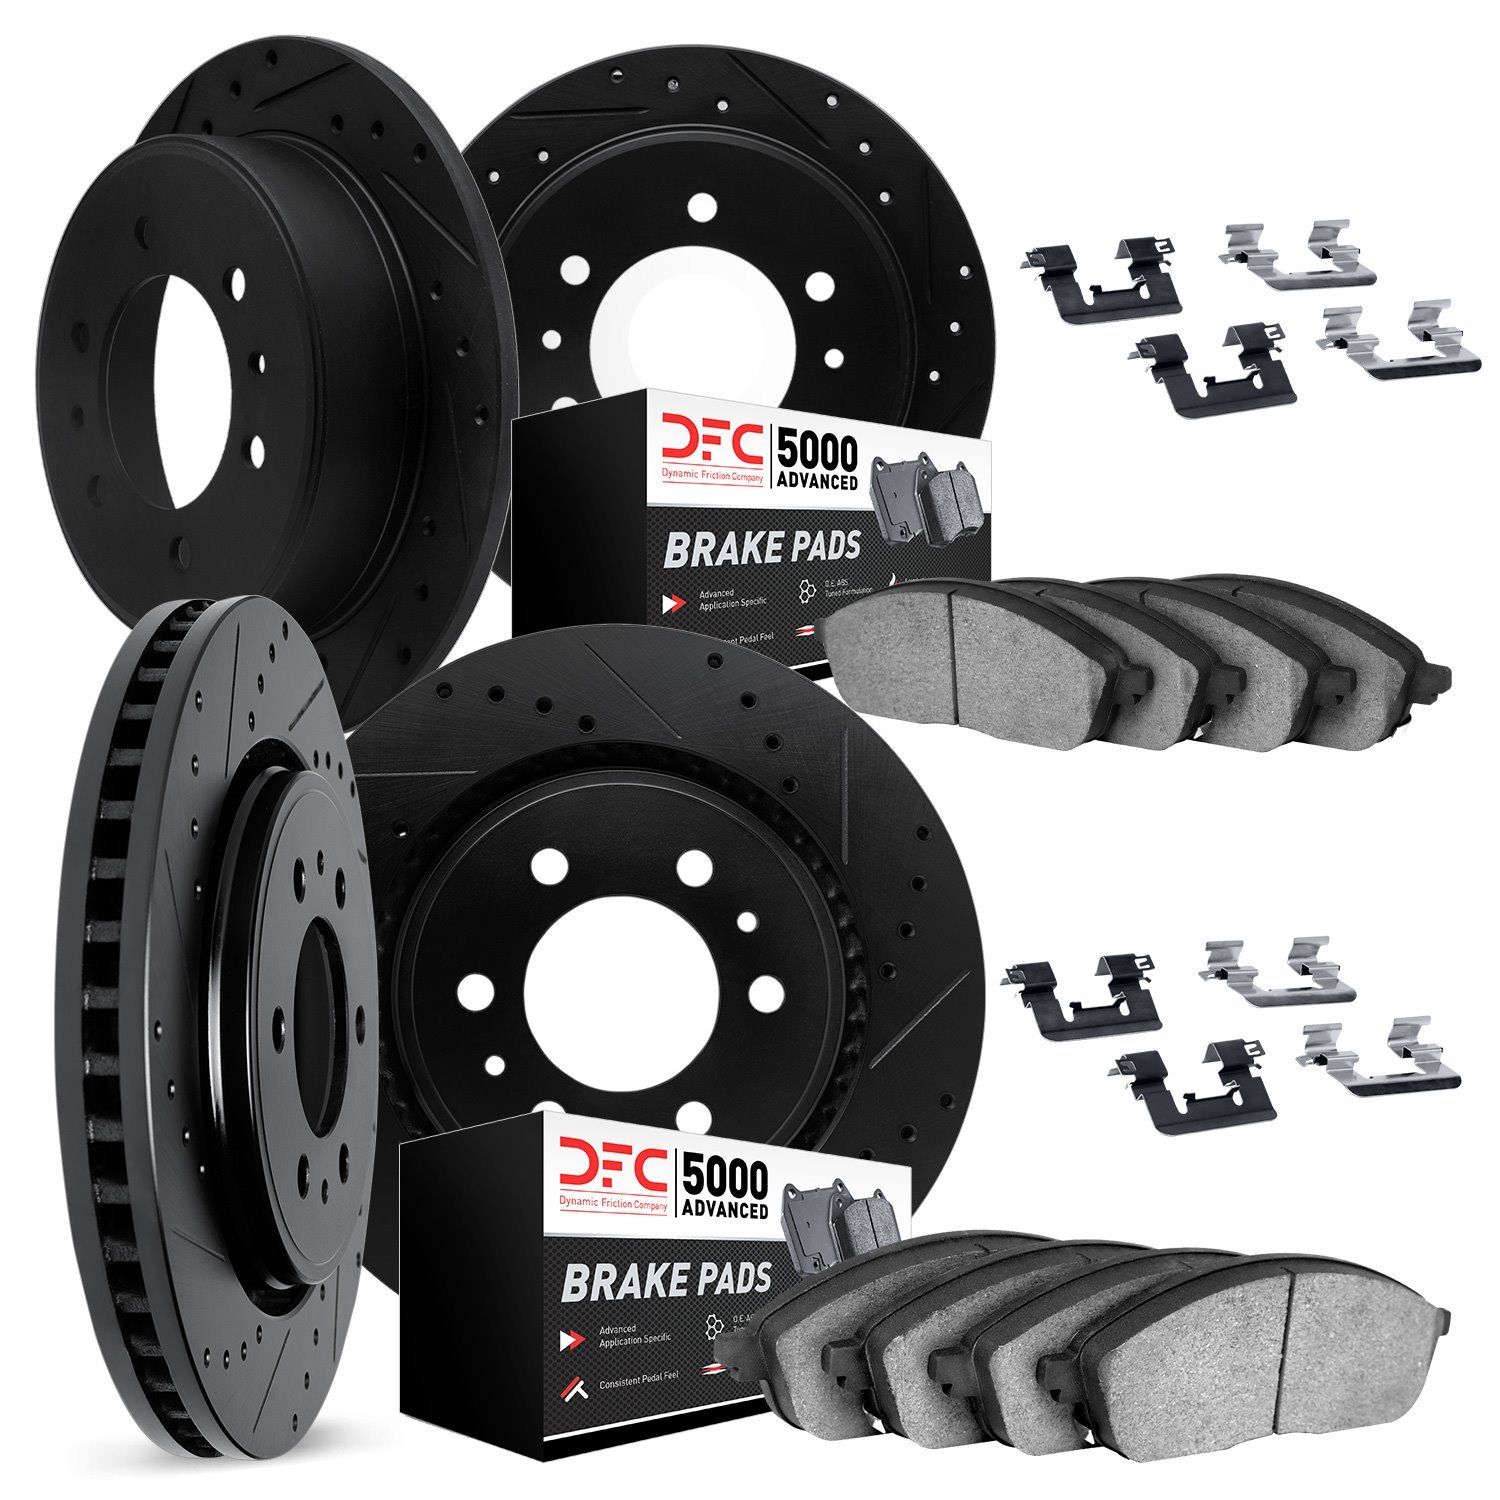 8514-40262 Drilled/Slotted Brake Rotors w/5000 Advanced Brake Pads Kit & Hardware [Black], Fits Select Multiple Makes/Models, Po